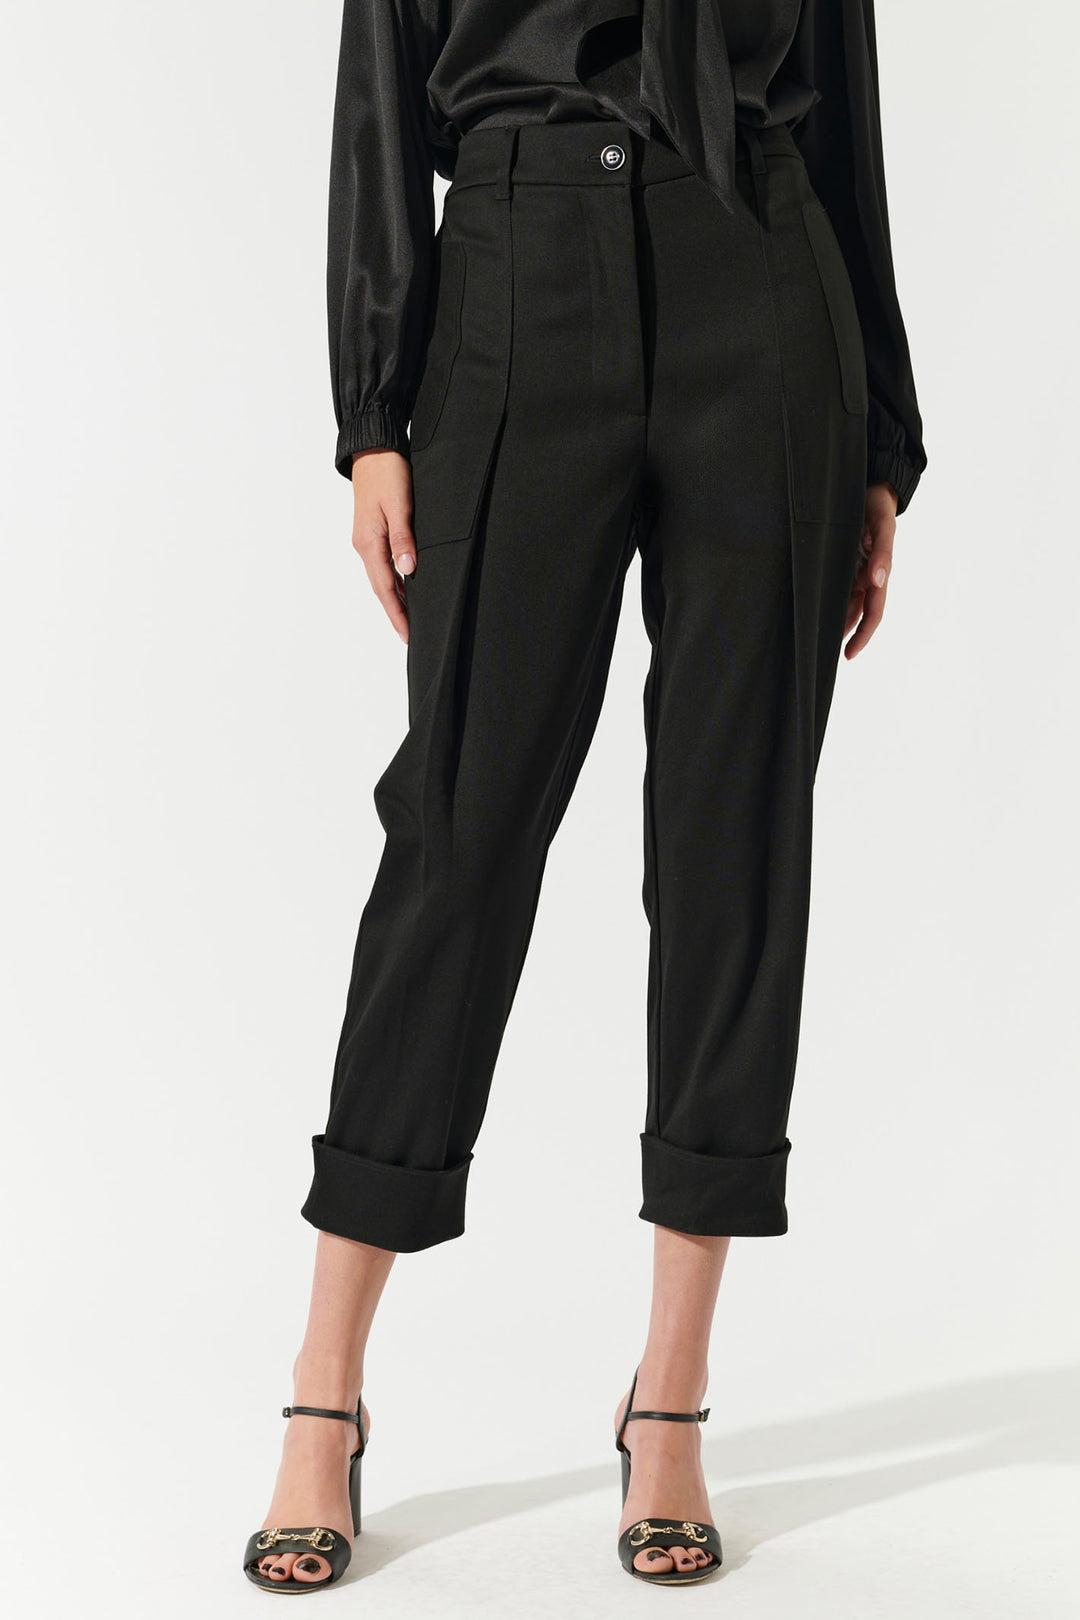 Dea Kudibal Cargonidea Trousers Black Pleat Detail 2660724 1000 - Olivia Grace Fashion